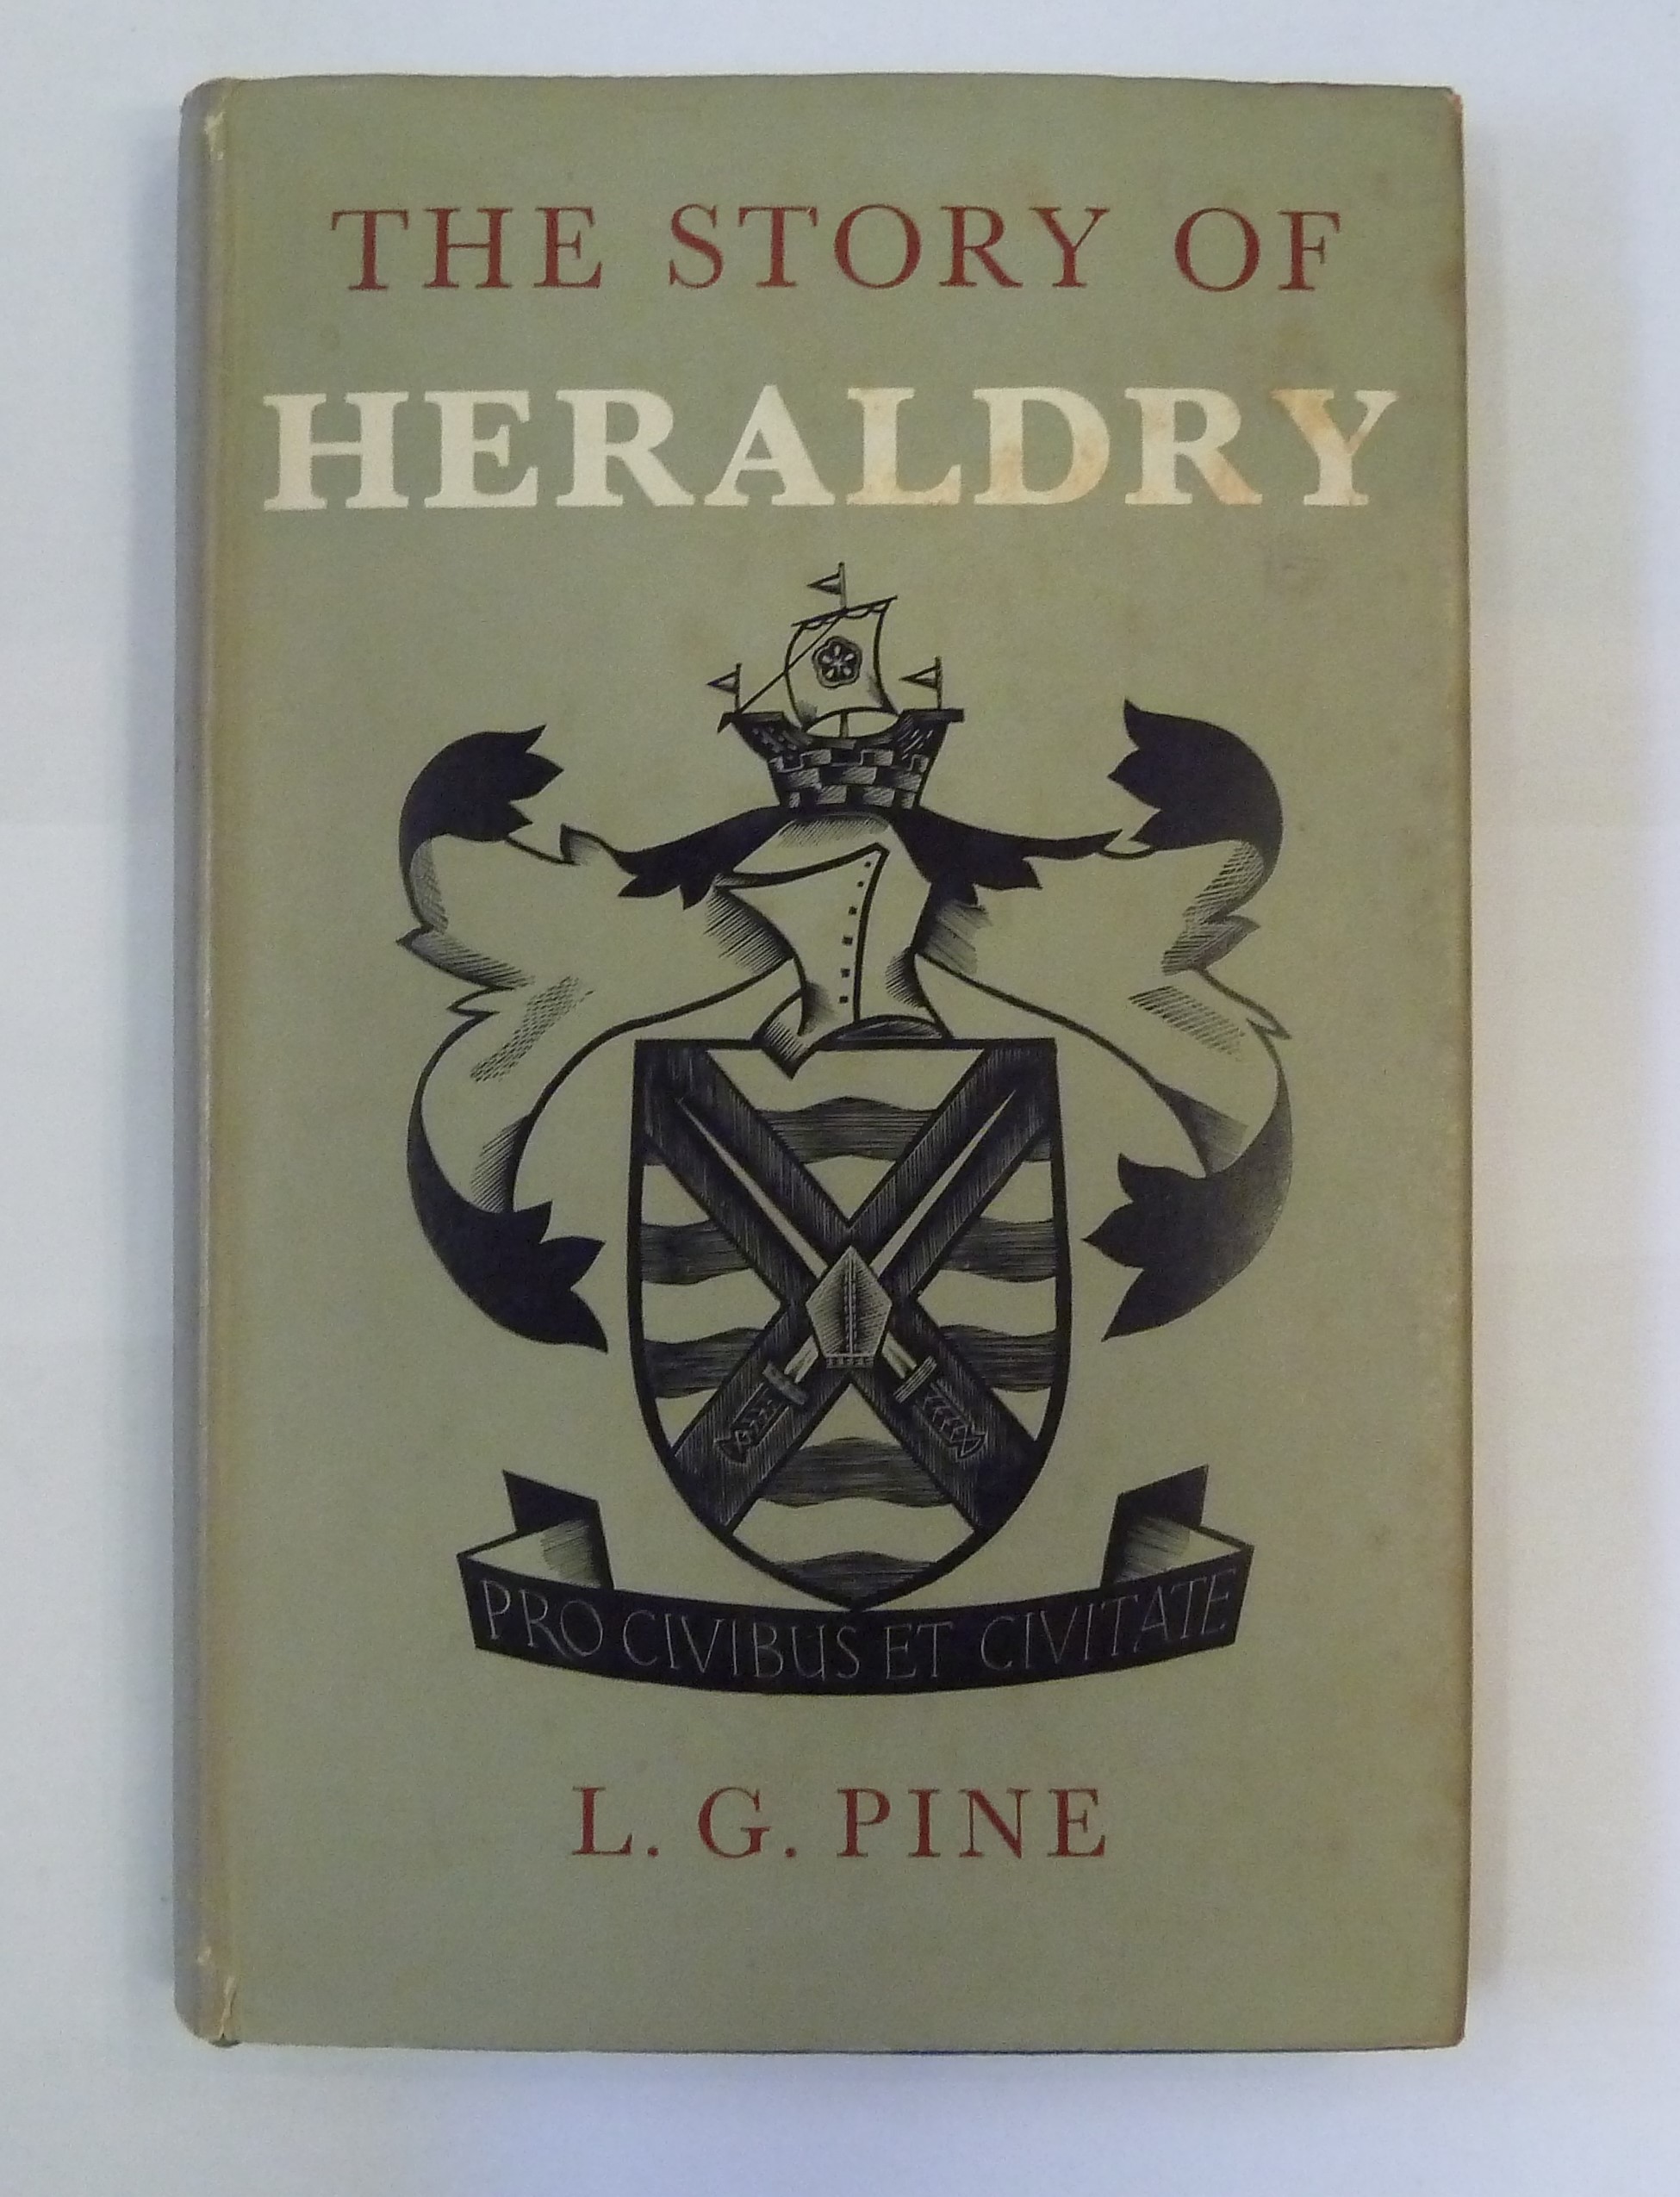 The Story of Heraldry